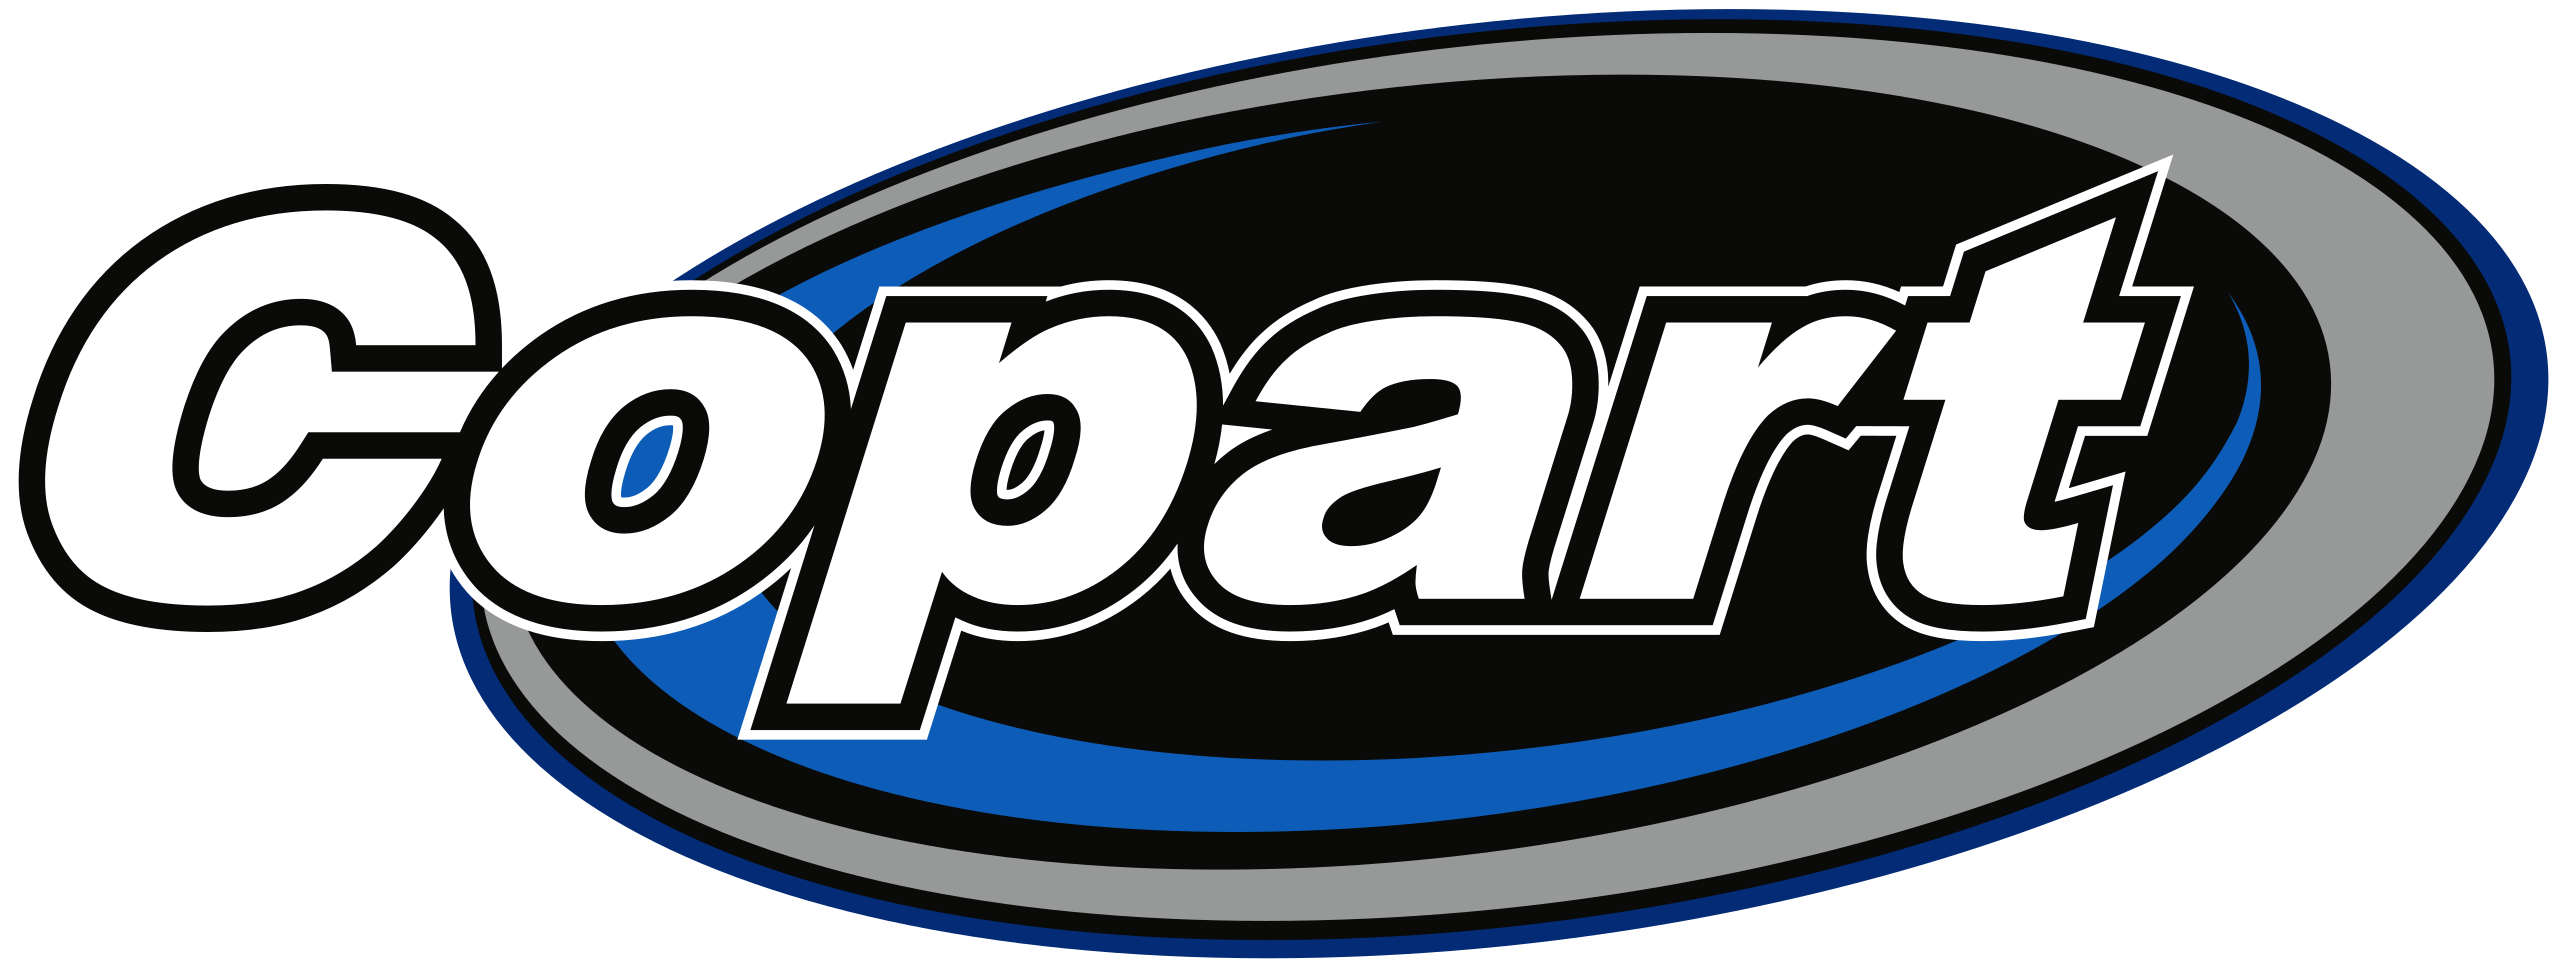 Copart_logo